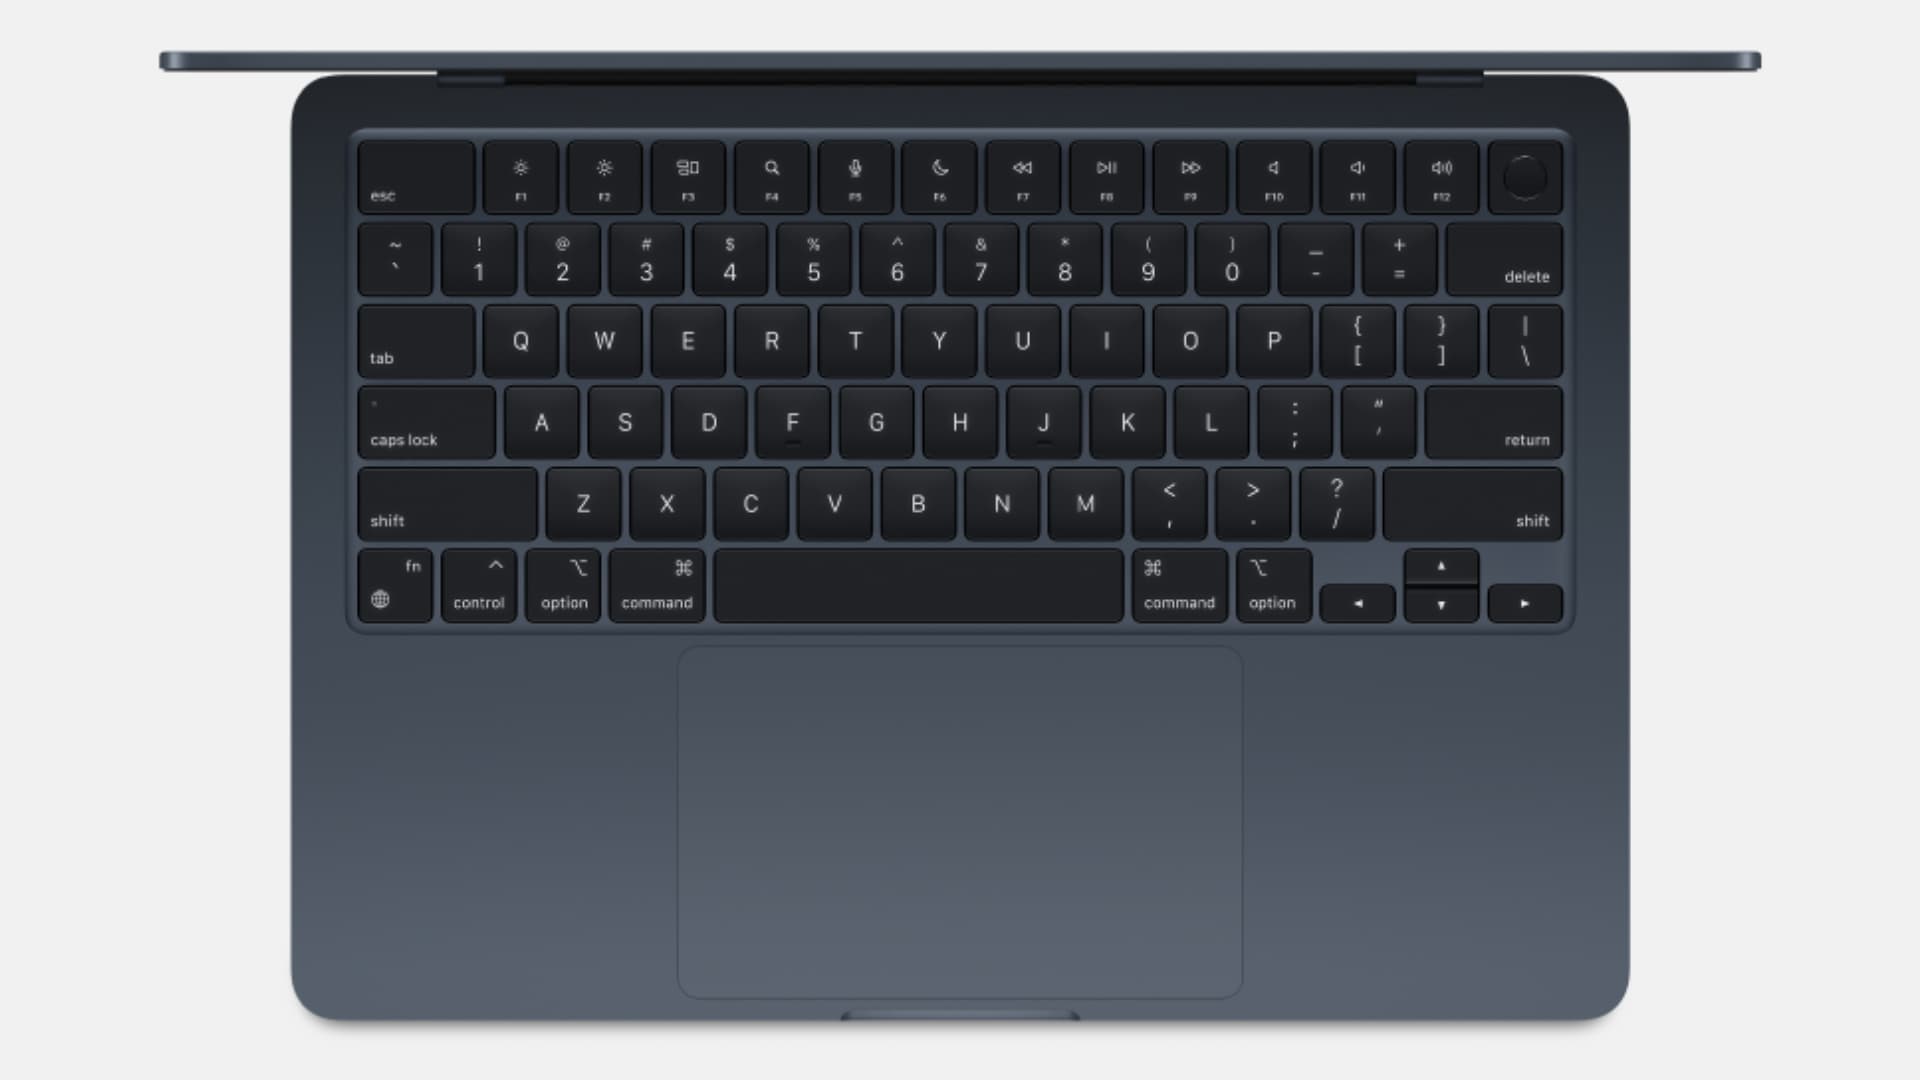 MacBook showing its keyboard